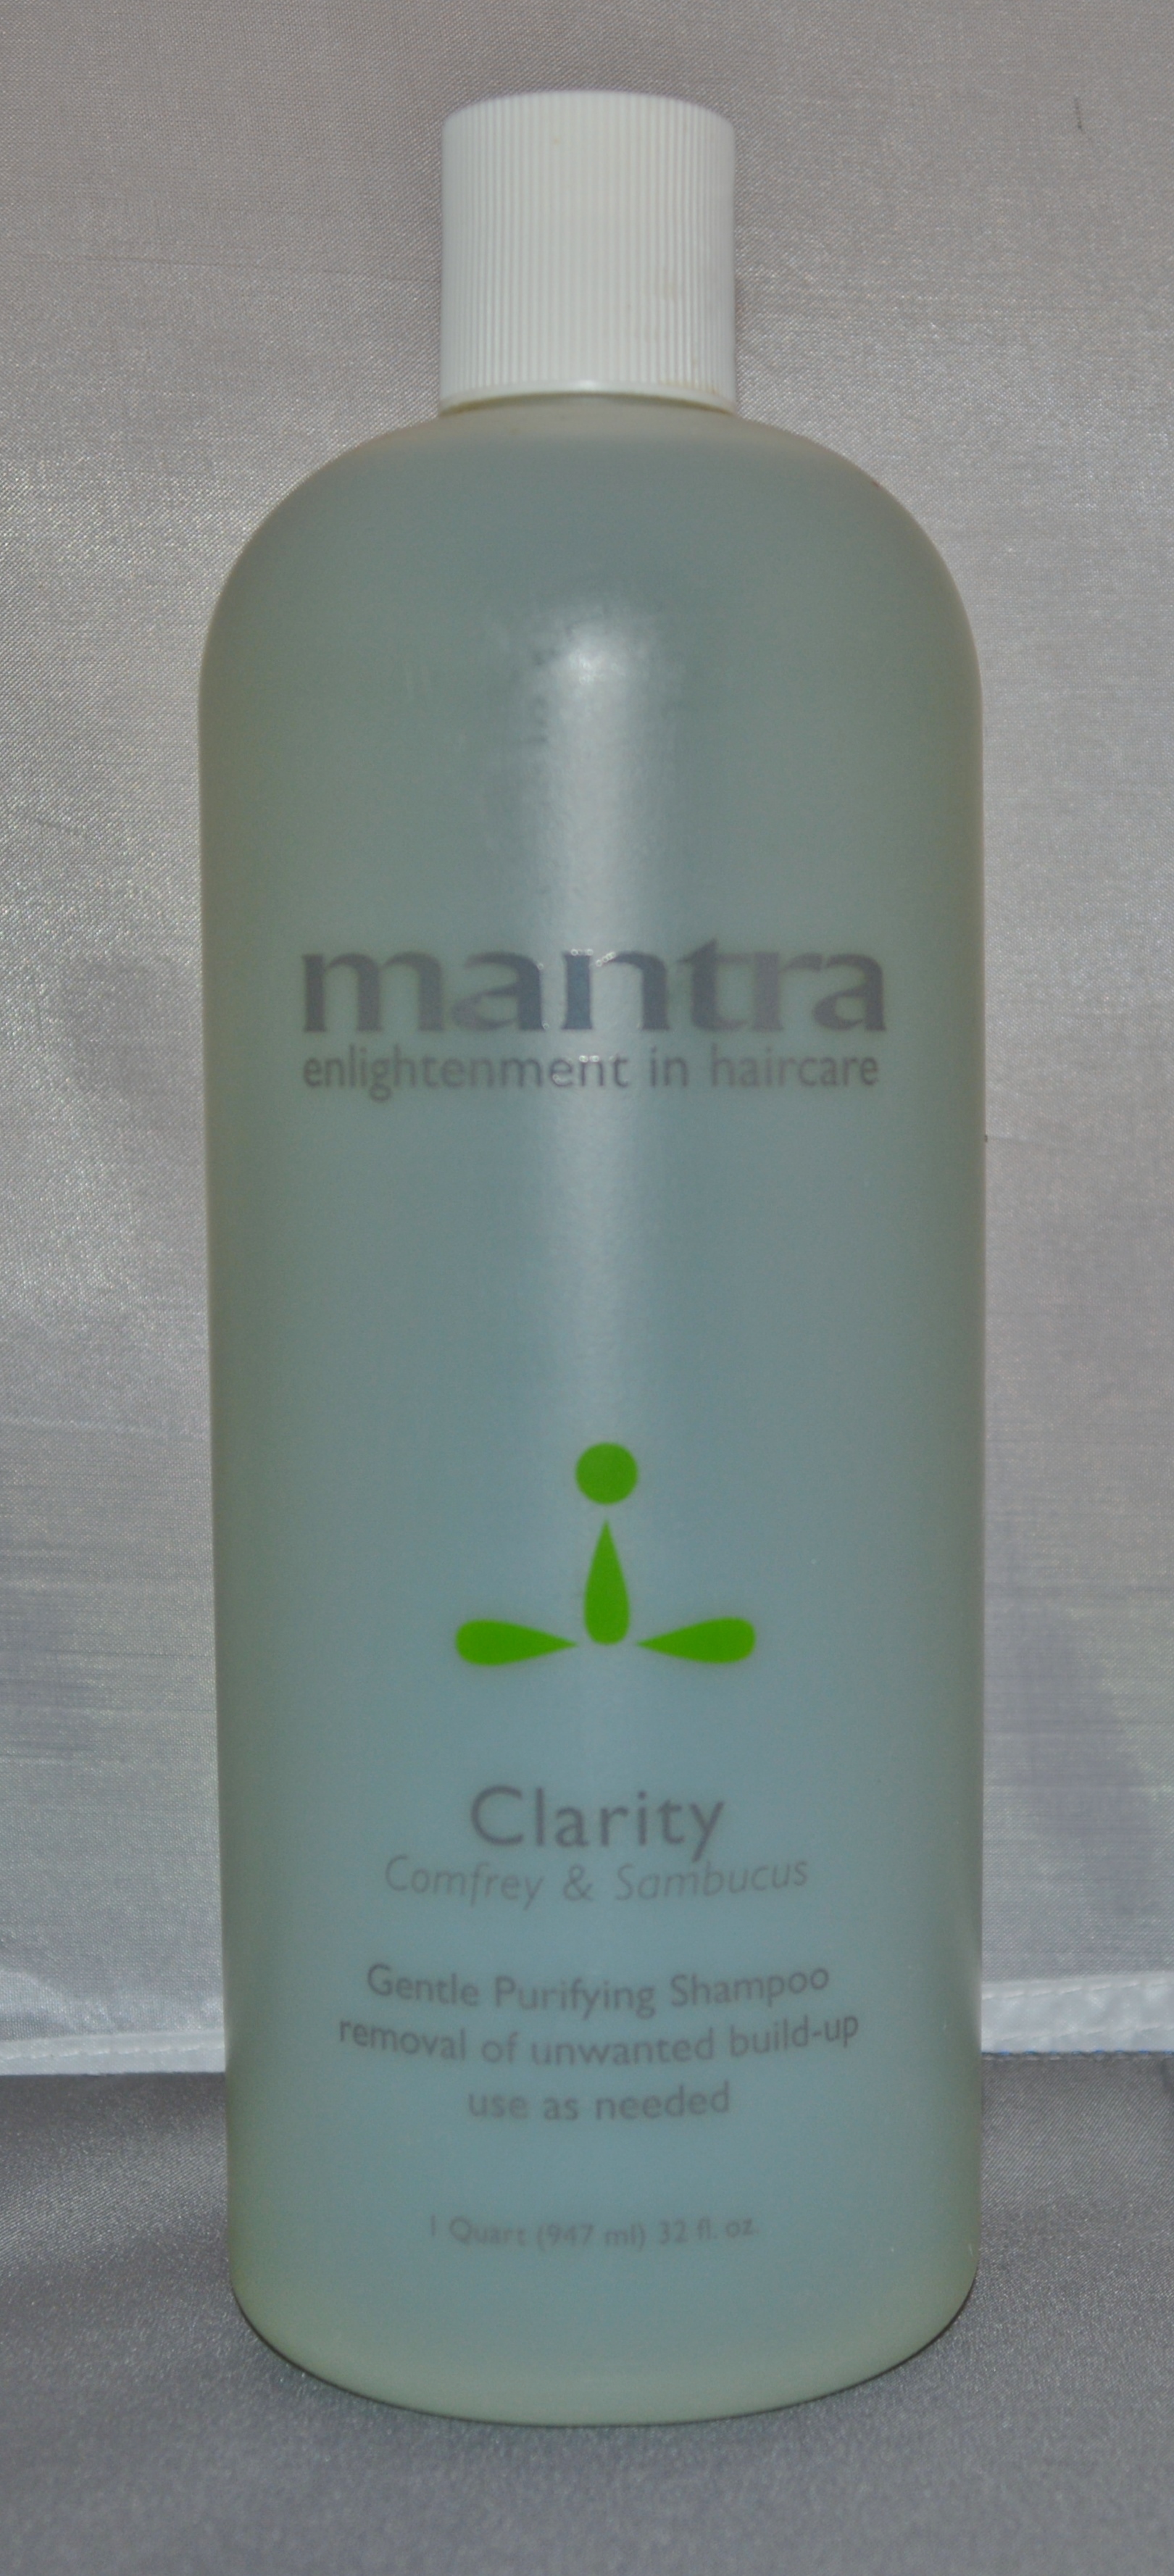 Mantra Clarity Gentle Purifying Shampoo 32 oz